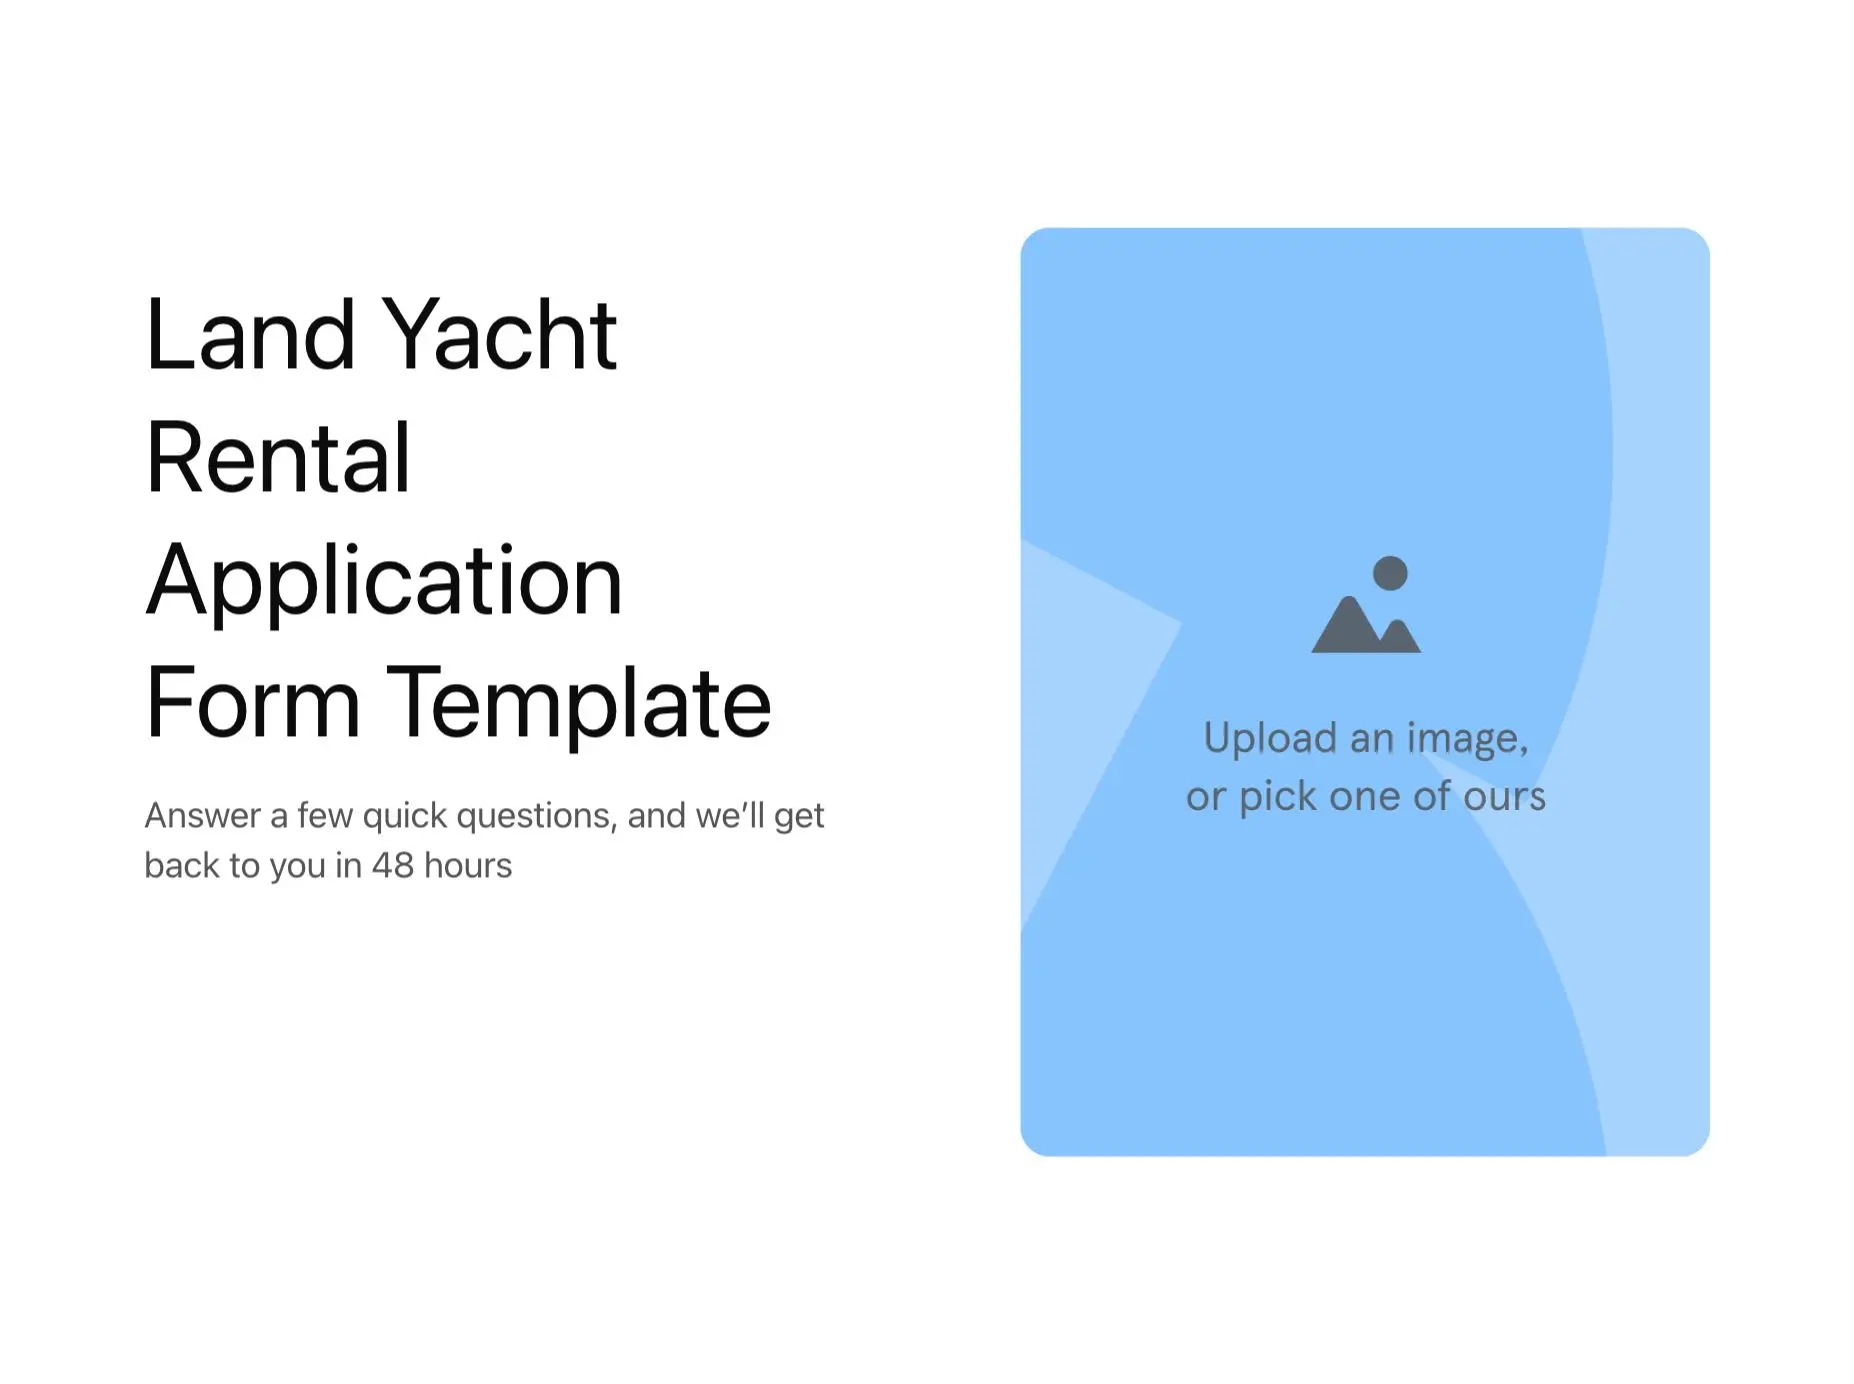 Land Yacht Rental Application Form Template Hero